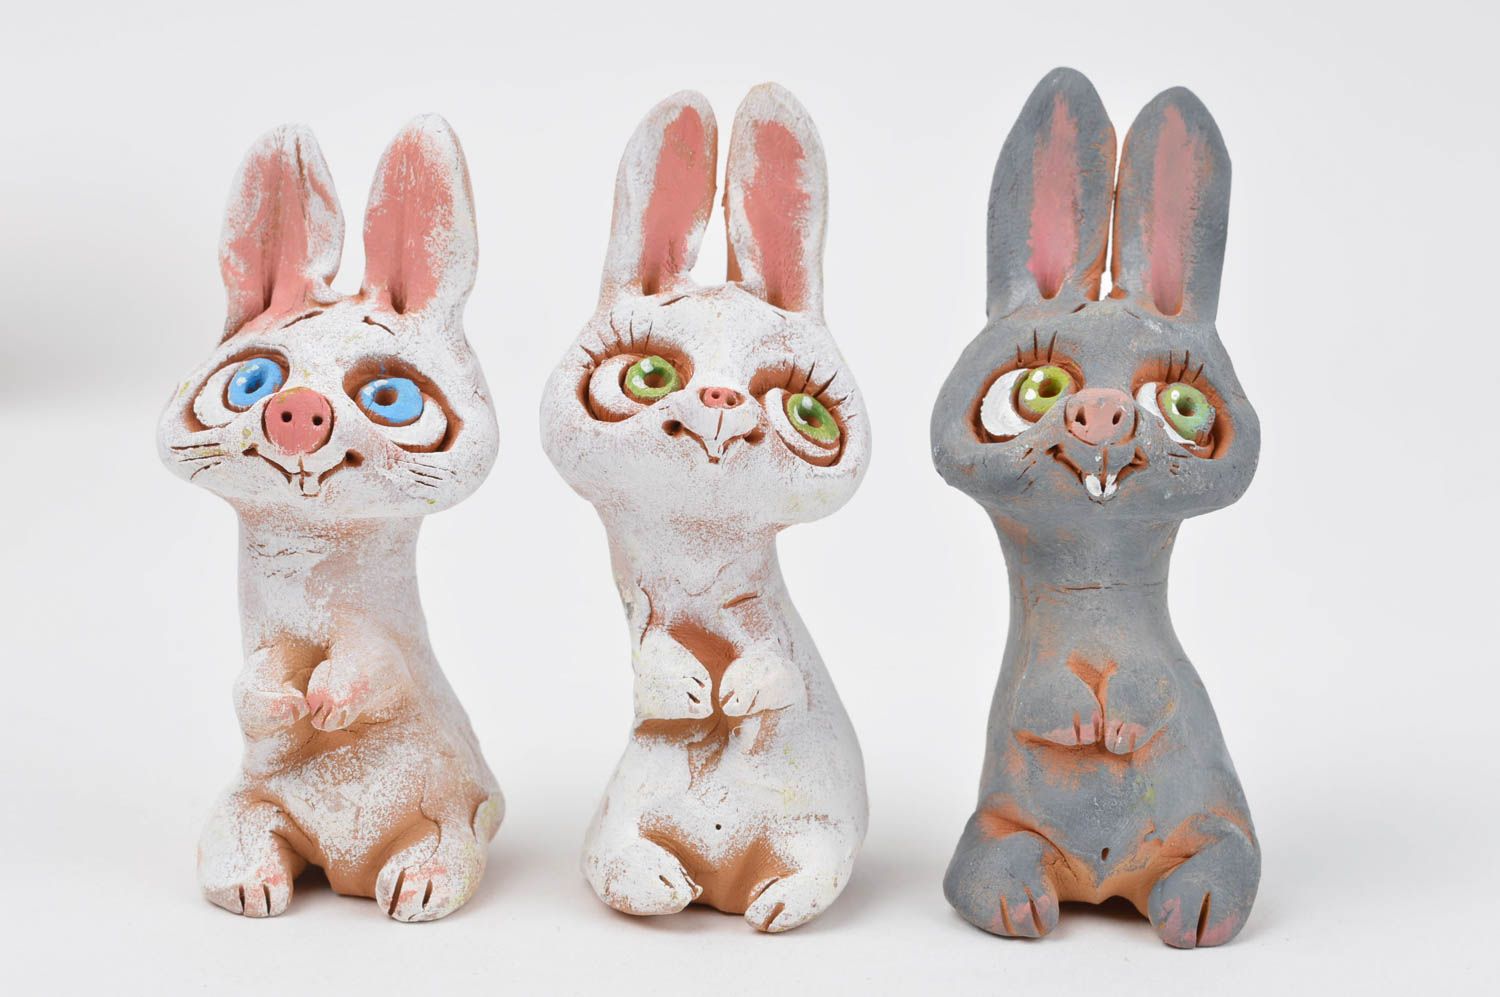 Handmade designer statuette 3 ceramic rabbits unusual home decor ideas photo 2